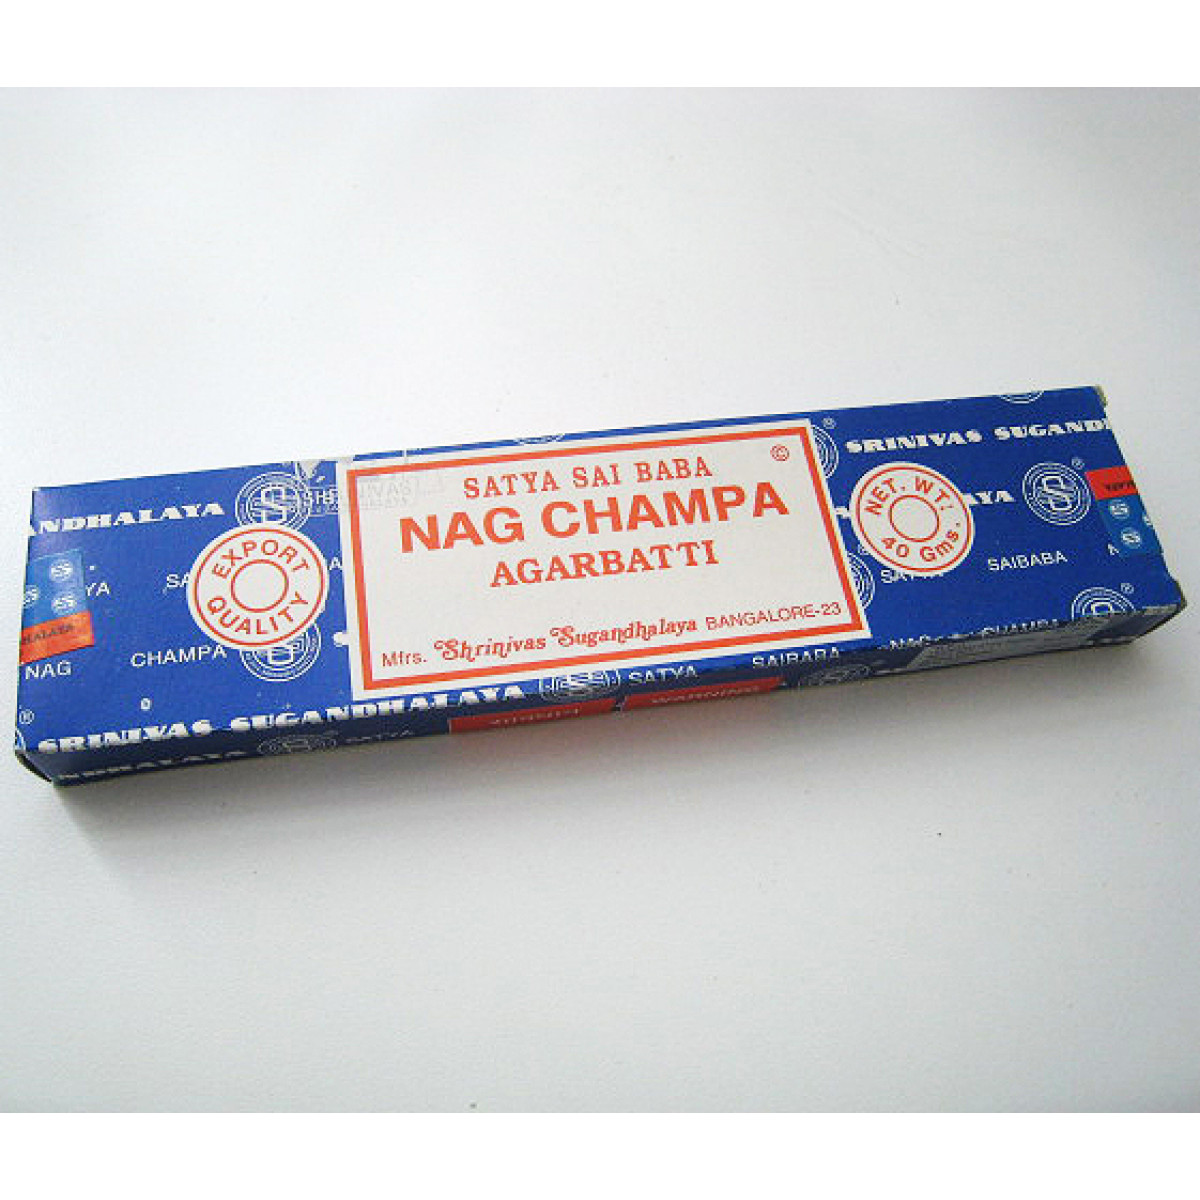 Nag Champa Sai Baba 100 g / 6er Pack